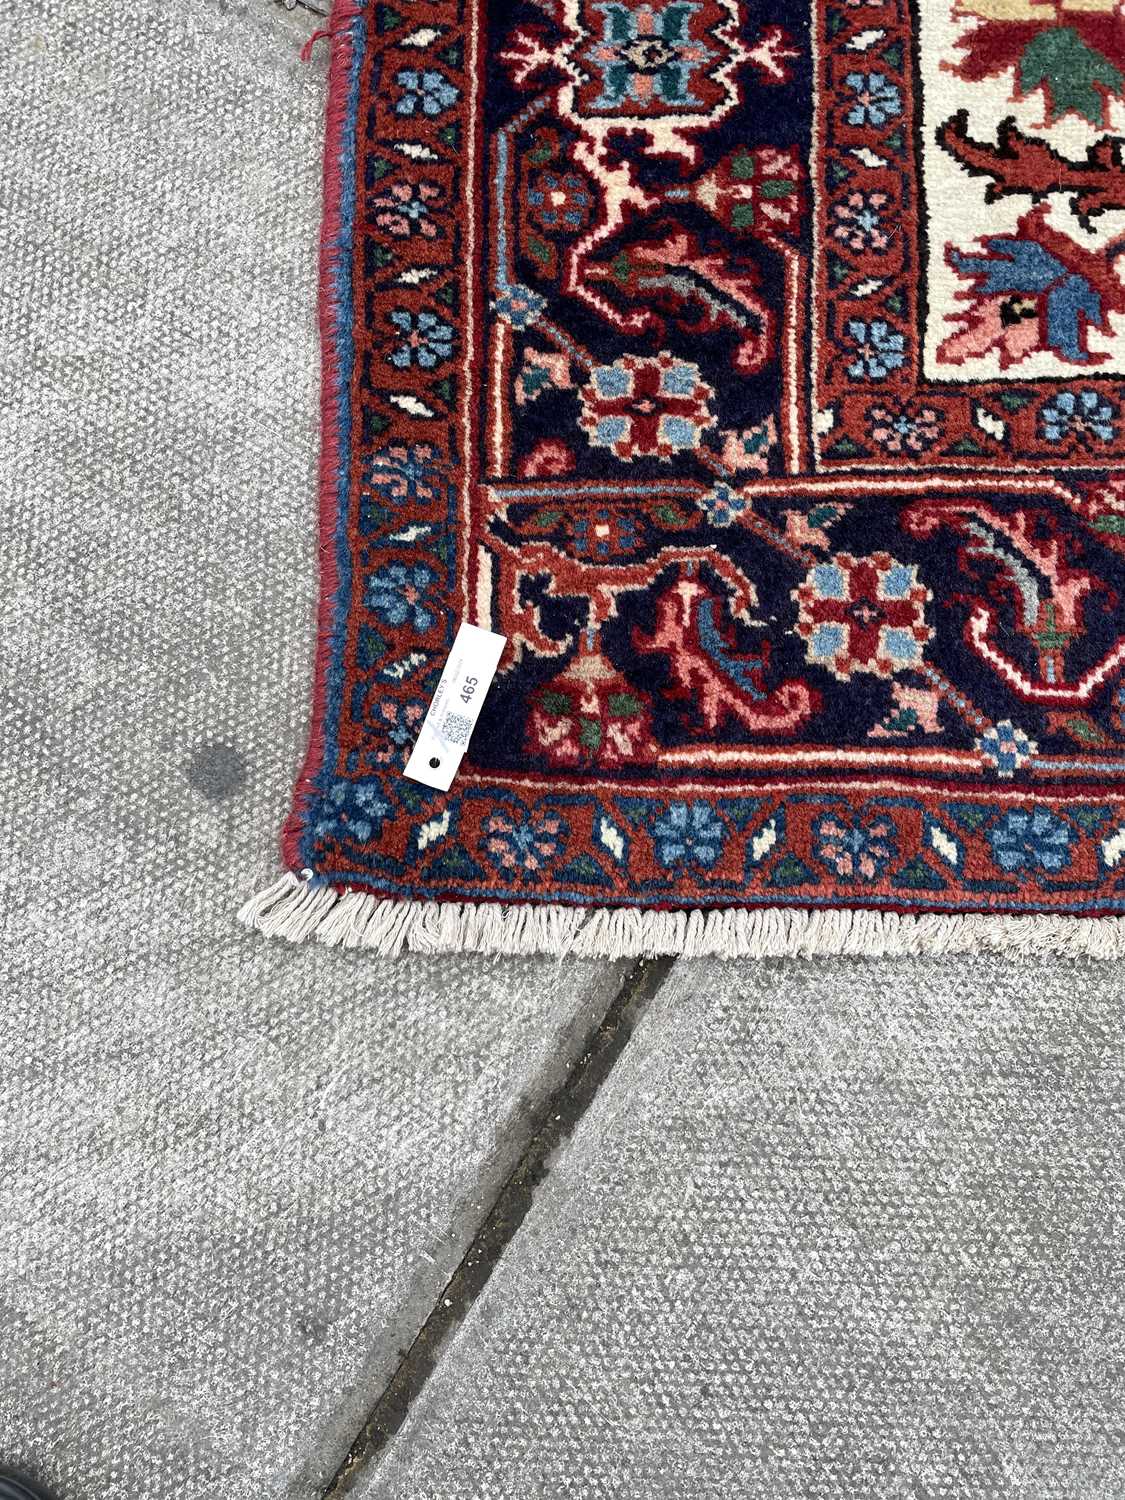 A Heriz rug - Image 12 of 17